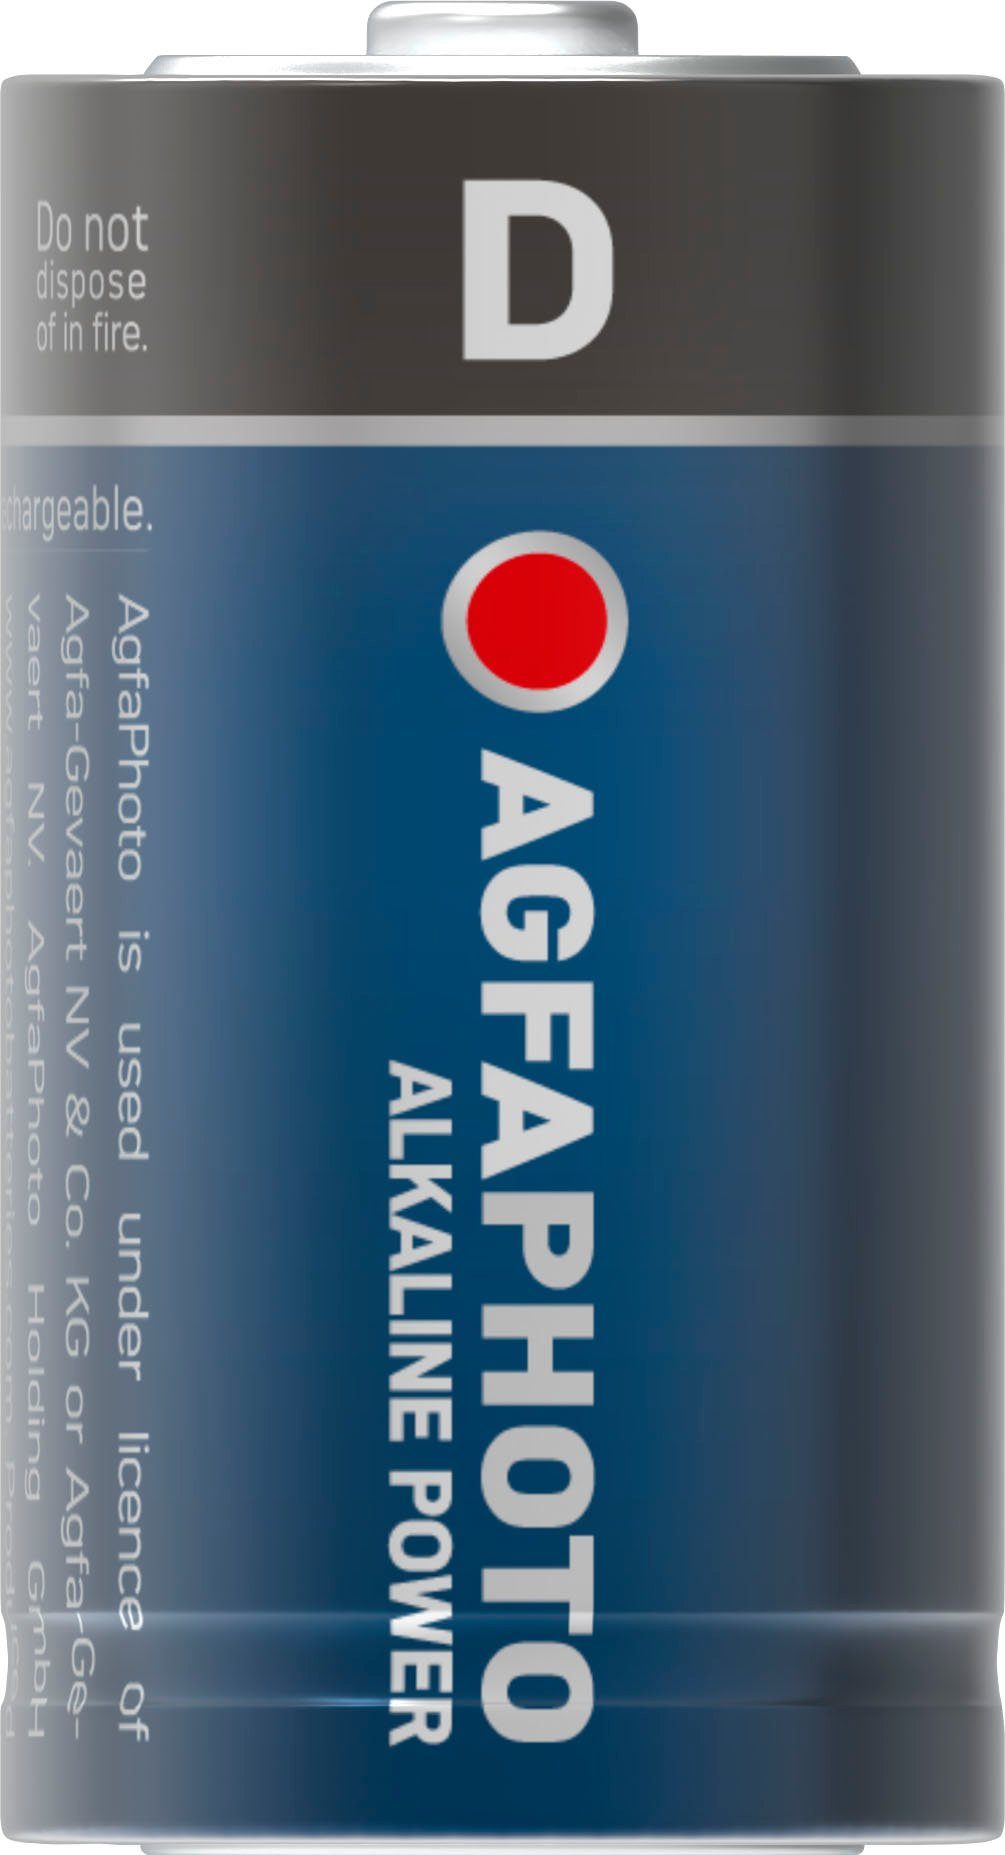 (1,5 St) AgfaPhoto 2er V, 2 Pack Batterie, LR20 Platinum